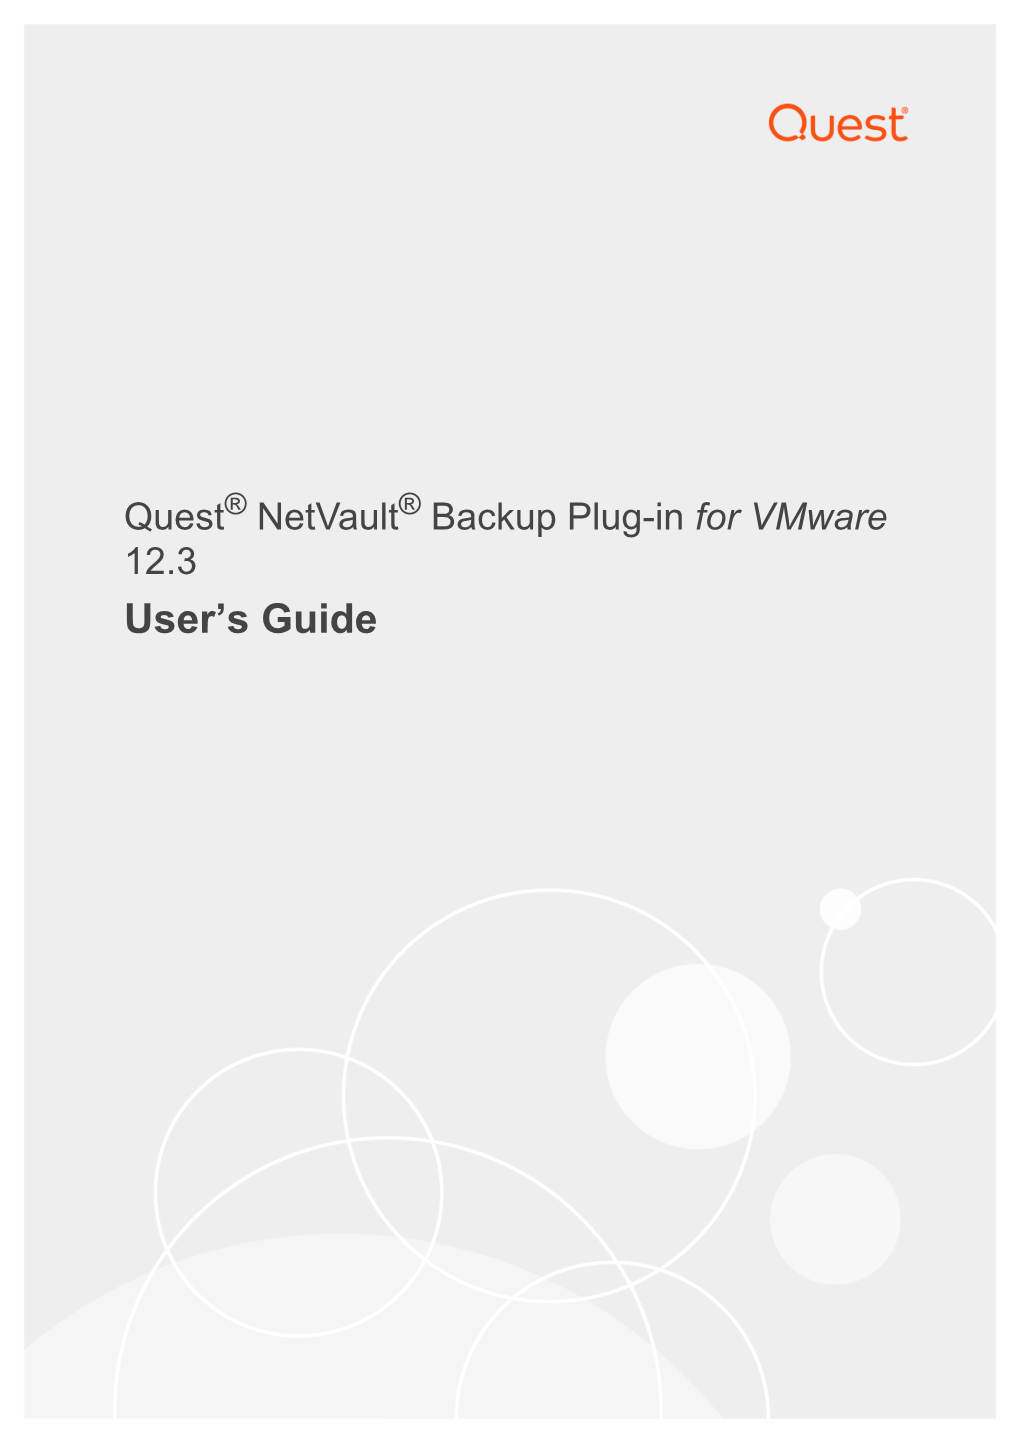 Netvault Backup Plug-In for Vmware User’S Guide Updated - June 2019 Software Version - 12.3 VMW-101-12.3-EN-01 Contents